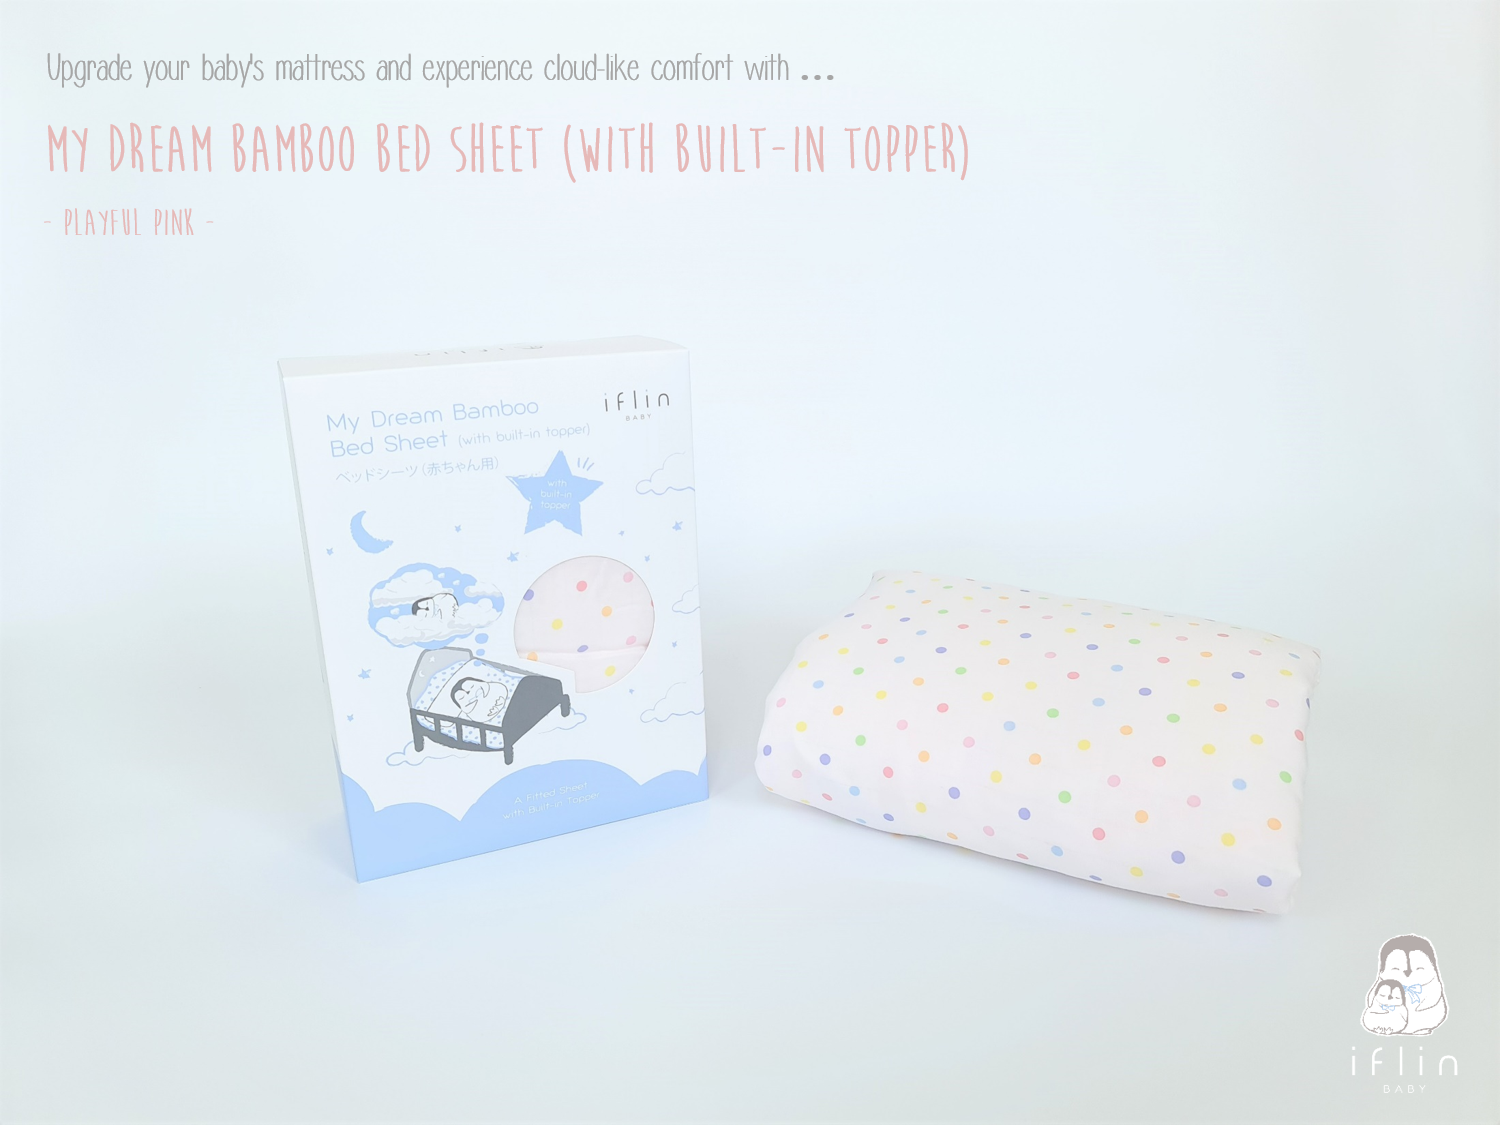 Iflin Baby - ผ้าปูที่นอนใยไผ่ (มีtopperนุ่มๆในตัว) - My Dream Bamboo Bed Sheet (with built-in topper) - ของใช้เด็ก